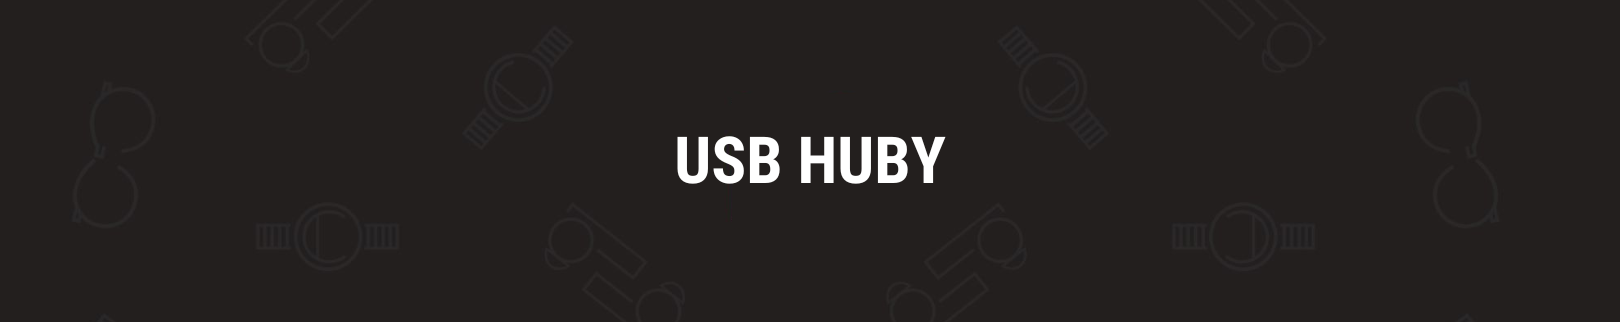 USB HUBY